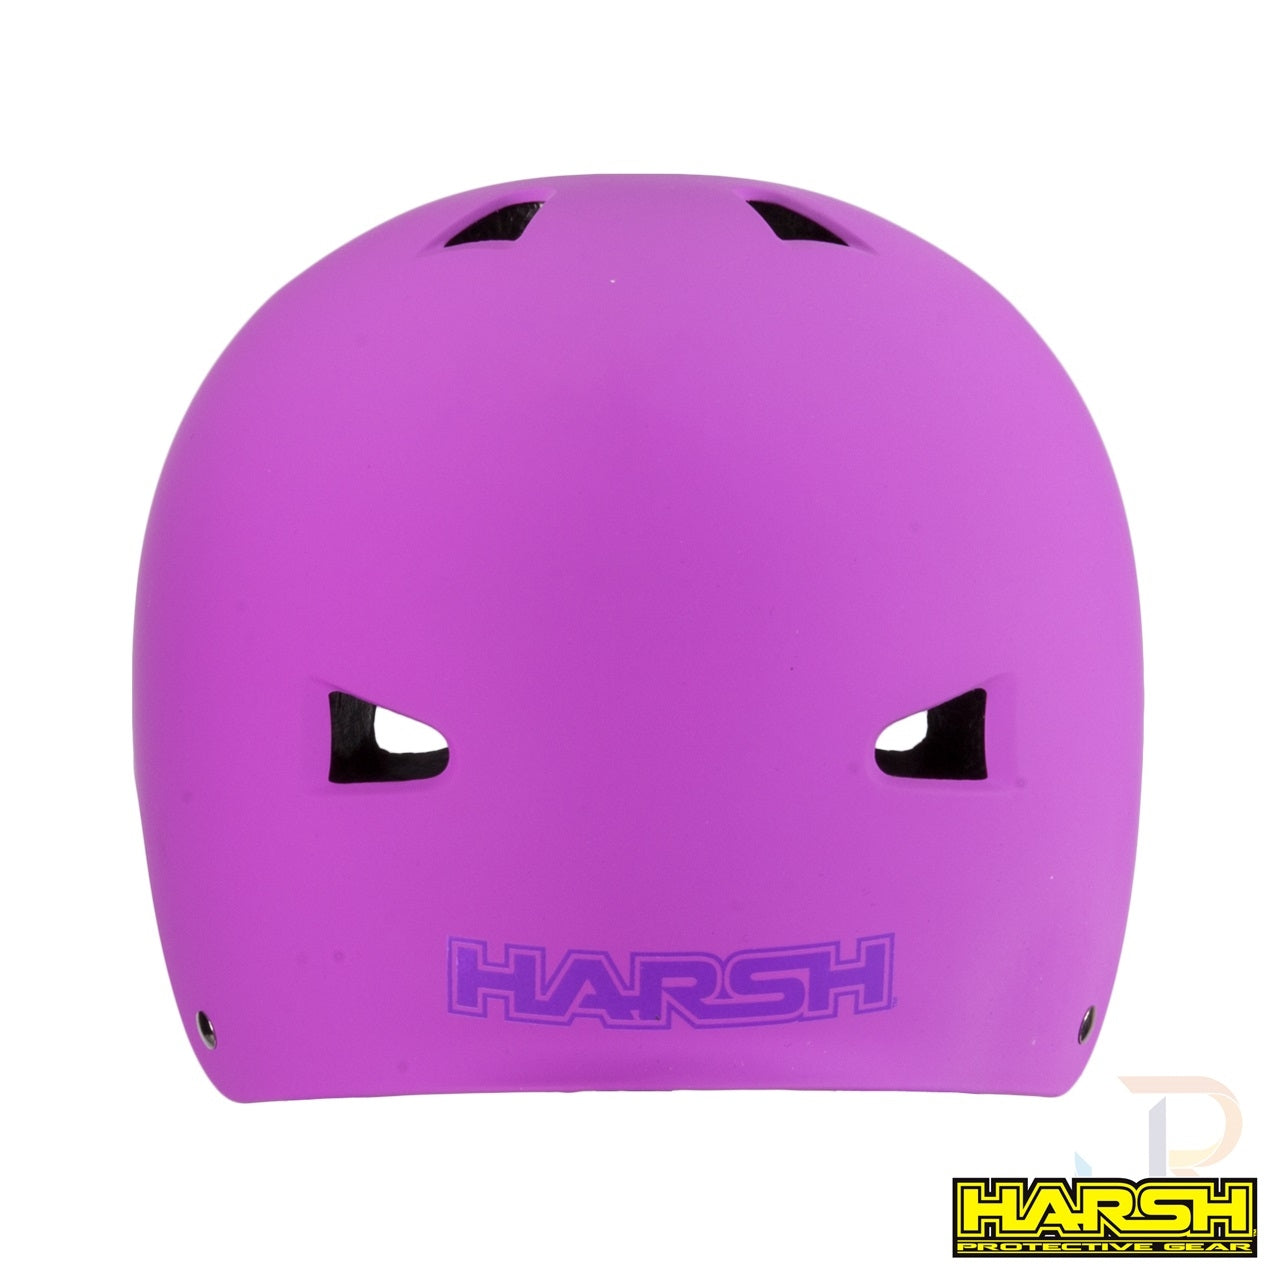 Harsh ABS Skate / Scooter Helmet - Pink - Back